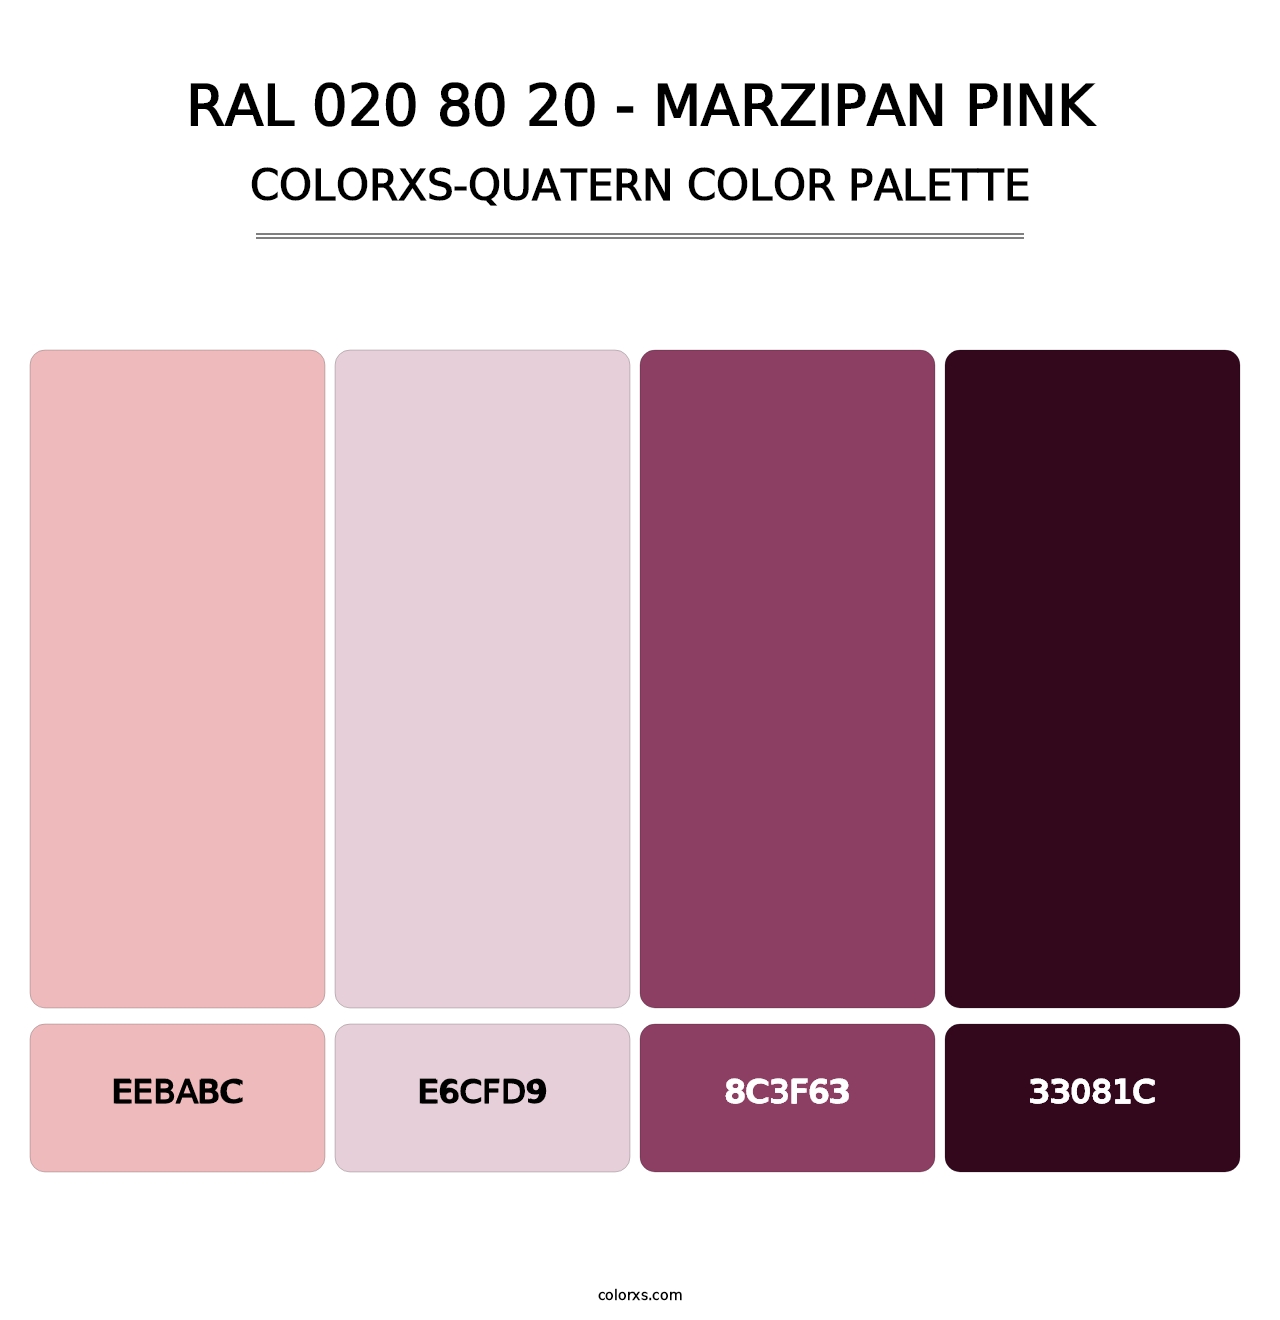 RAL 020 80 20 - Marzipan Pink - Colorxs Quatern Palette